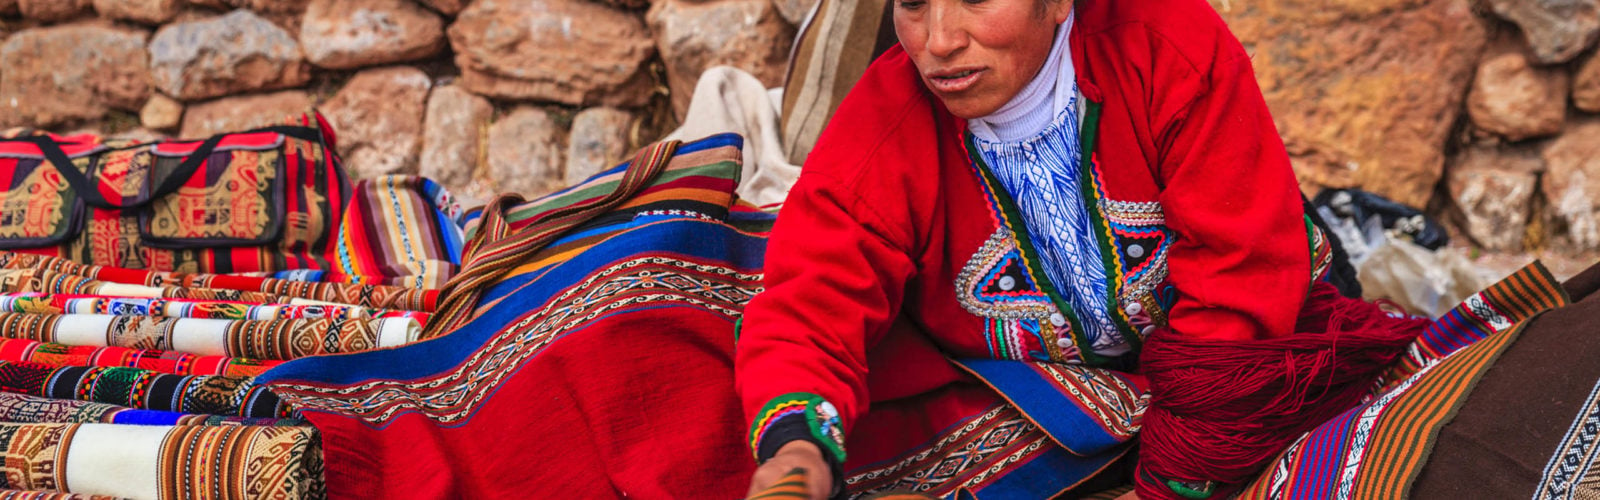 Peruvian woman, Inca ruins, Sacred Valley, Peru